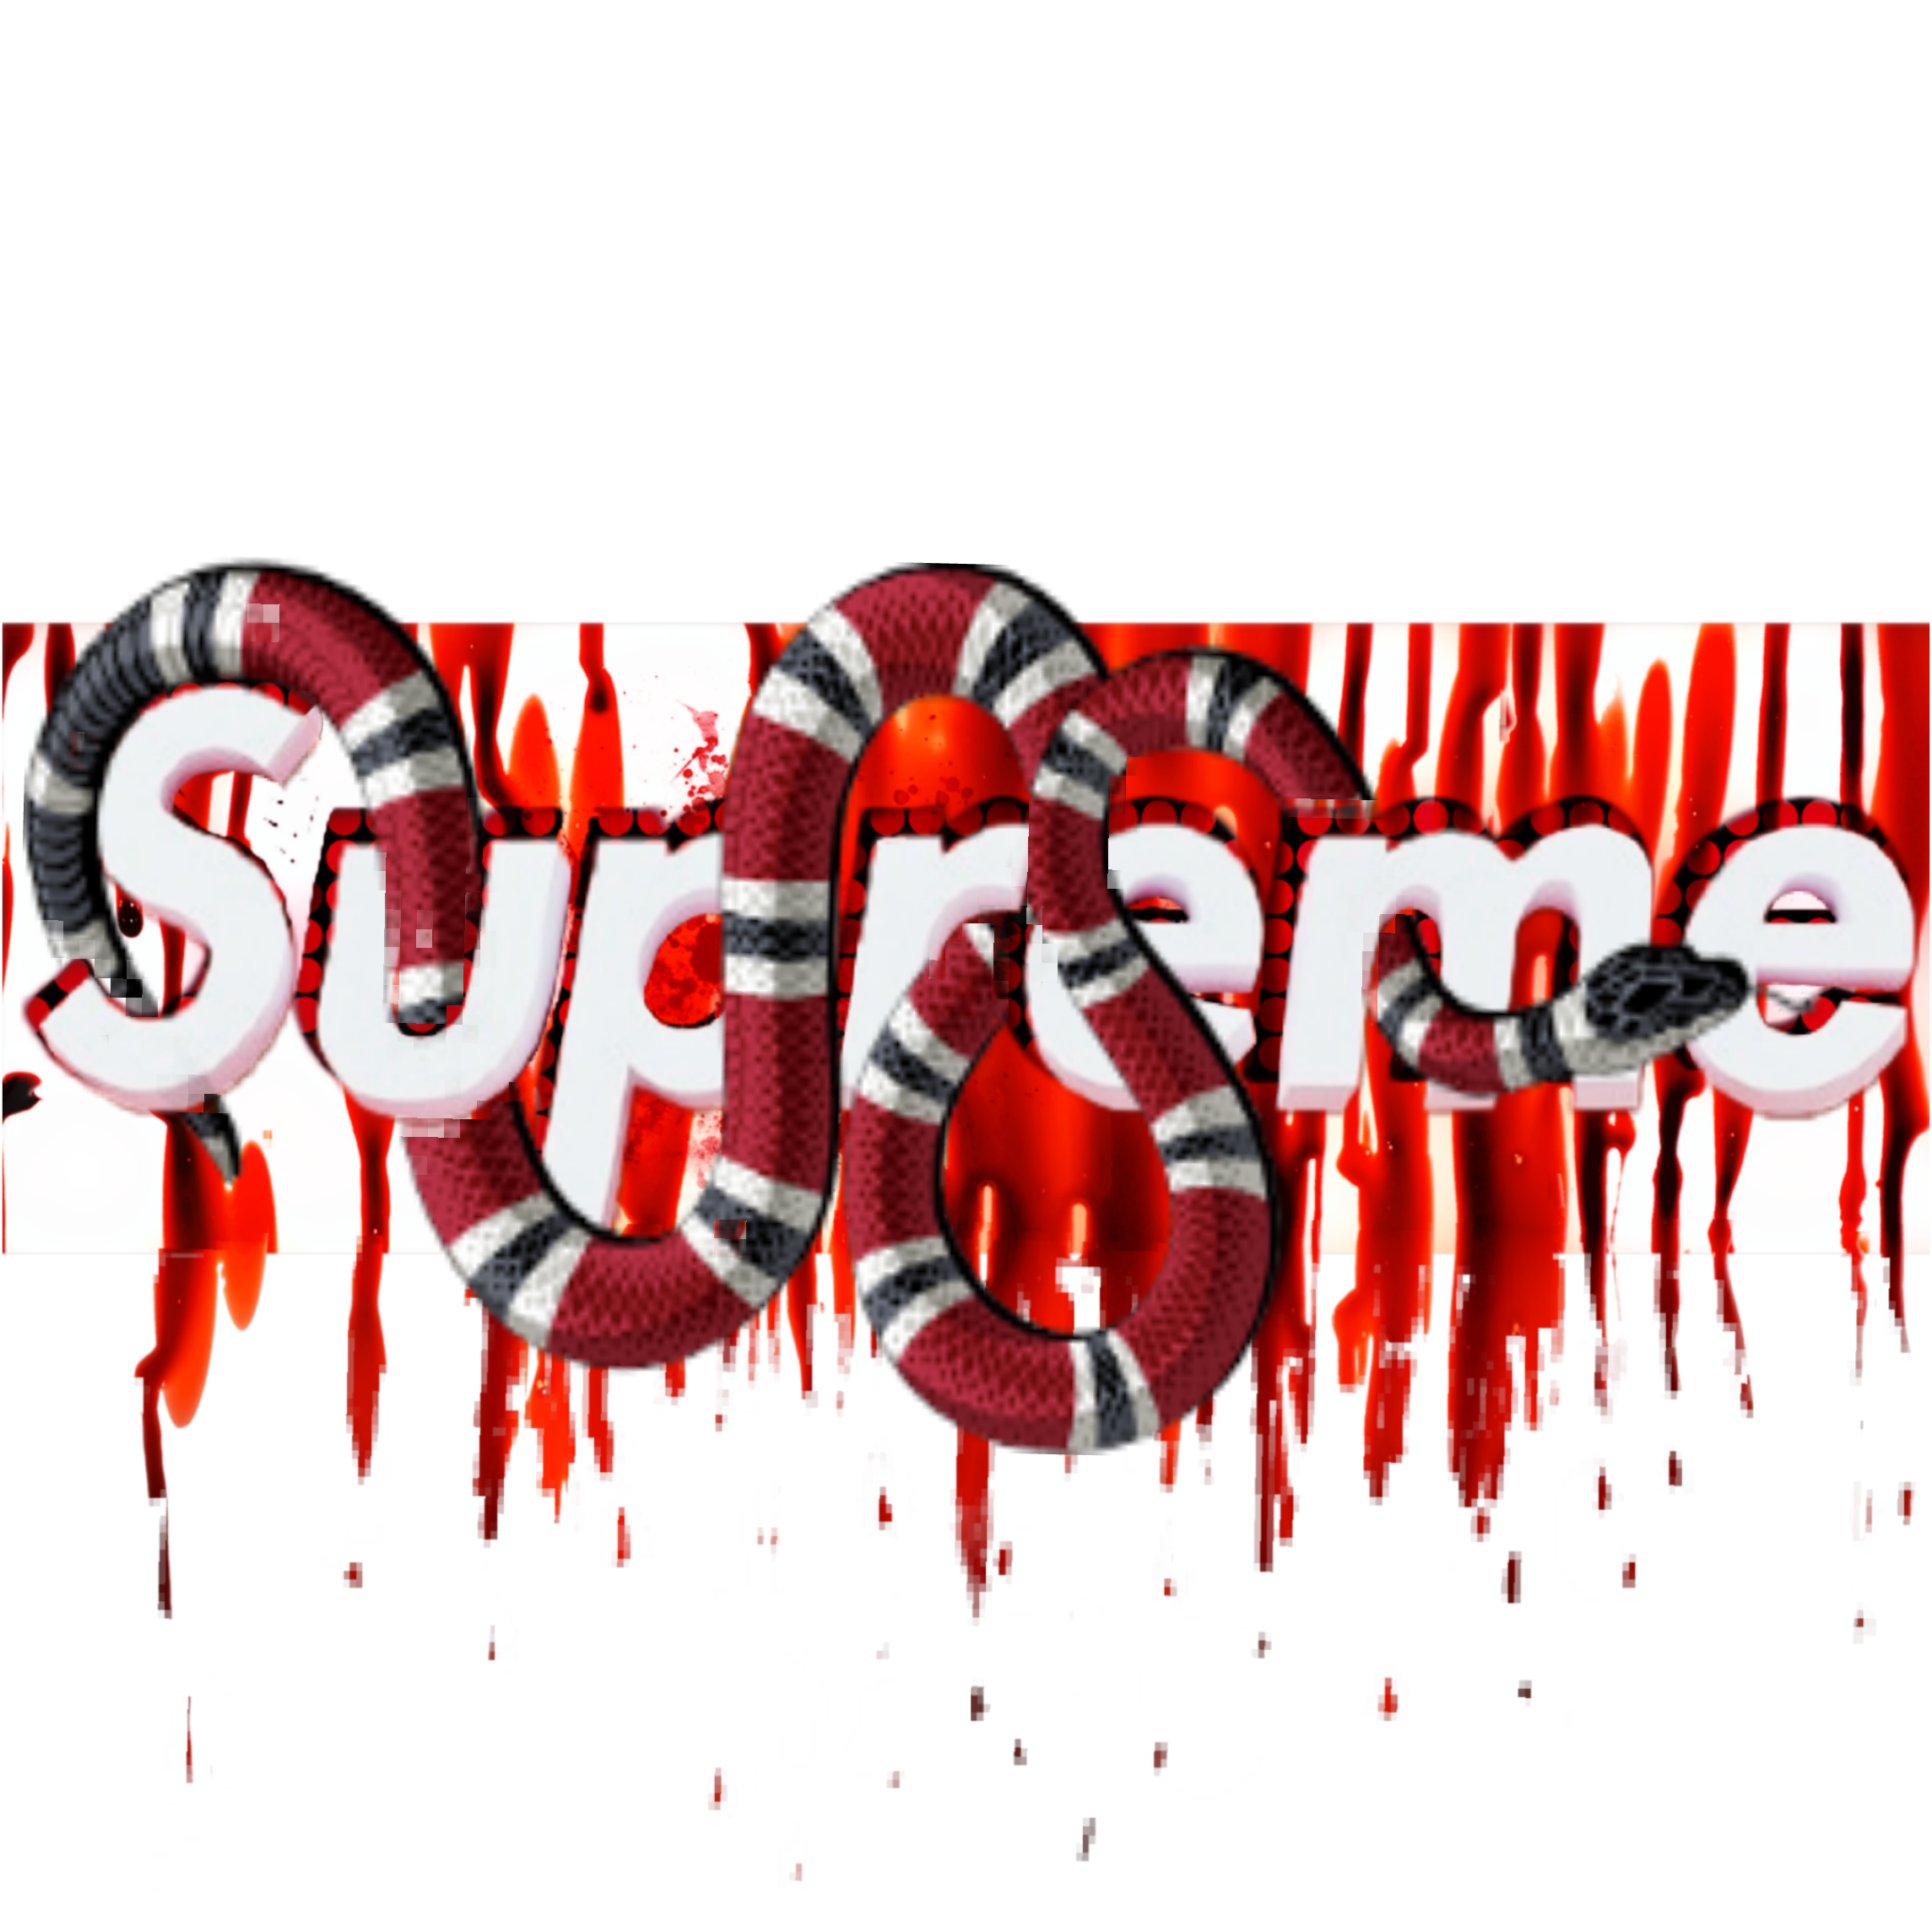 supreme logo with gucci snake